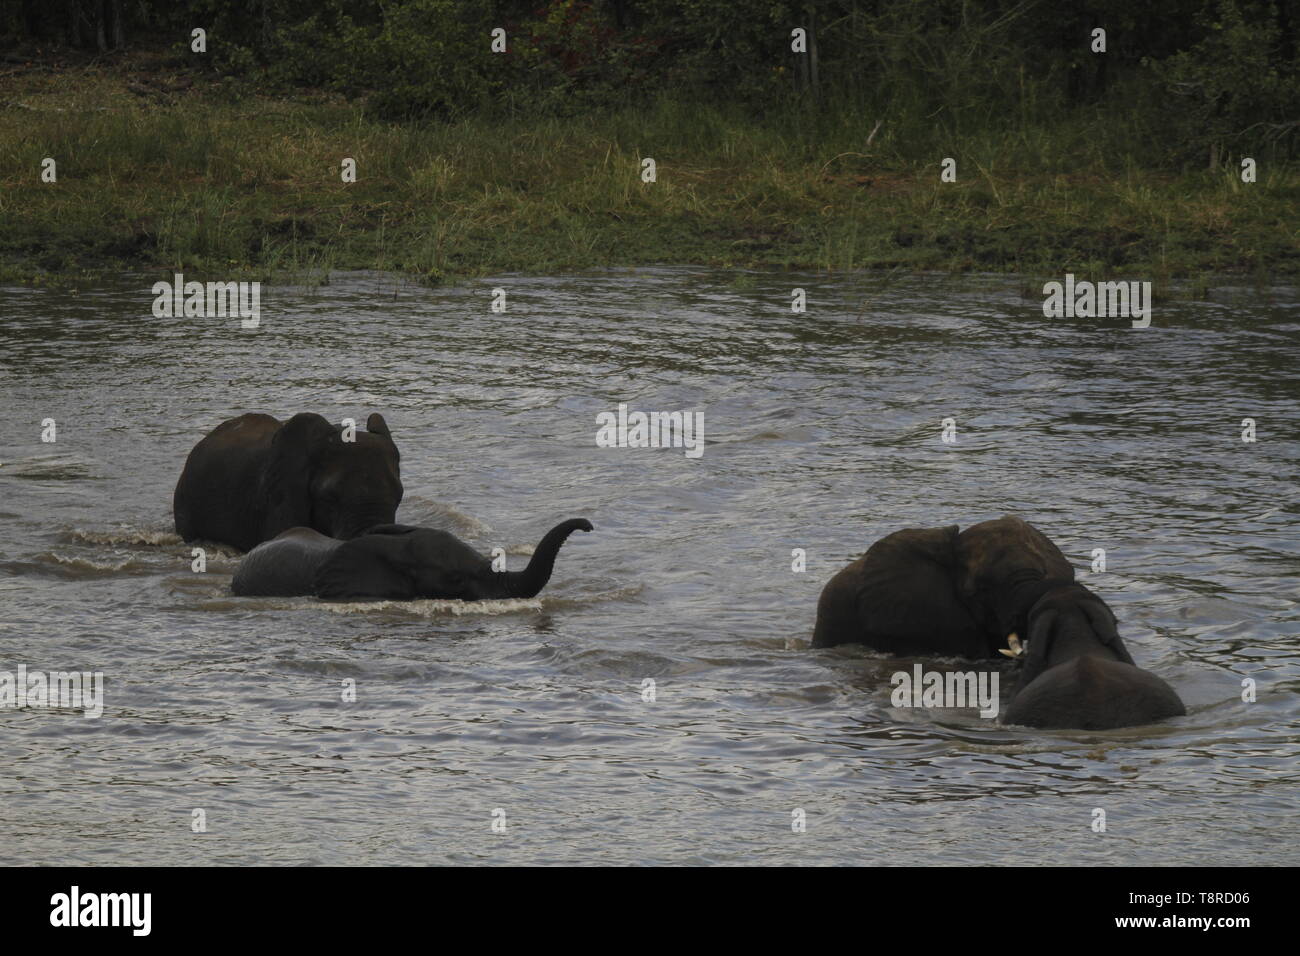 swimming Elephants in pioneer dam, near Mopani Camp Stock Photo